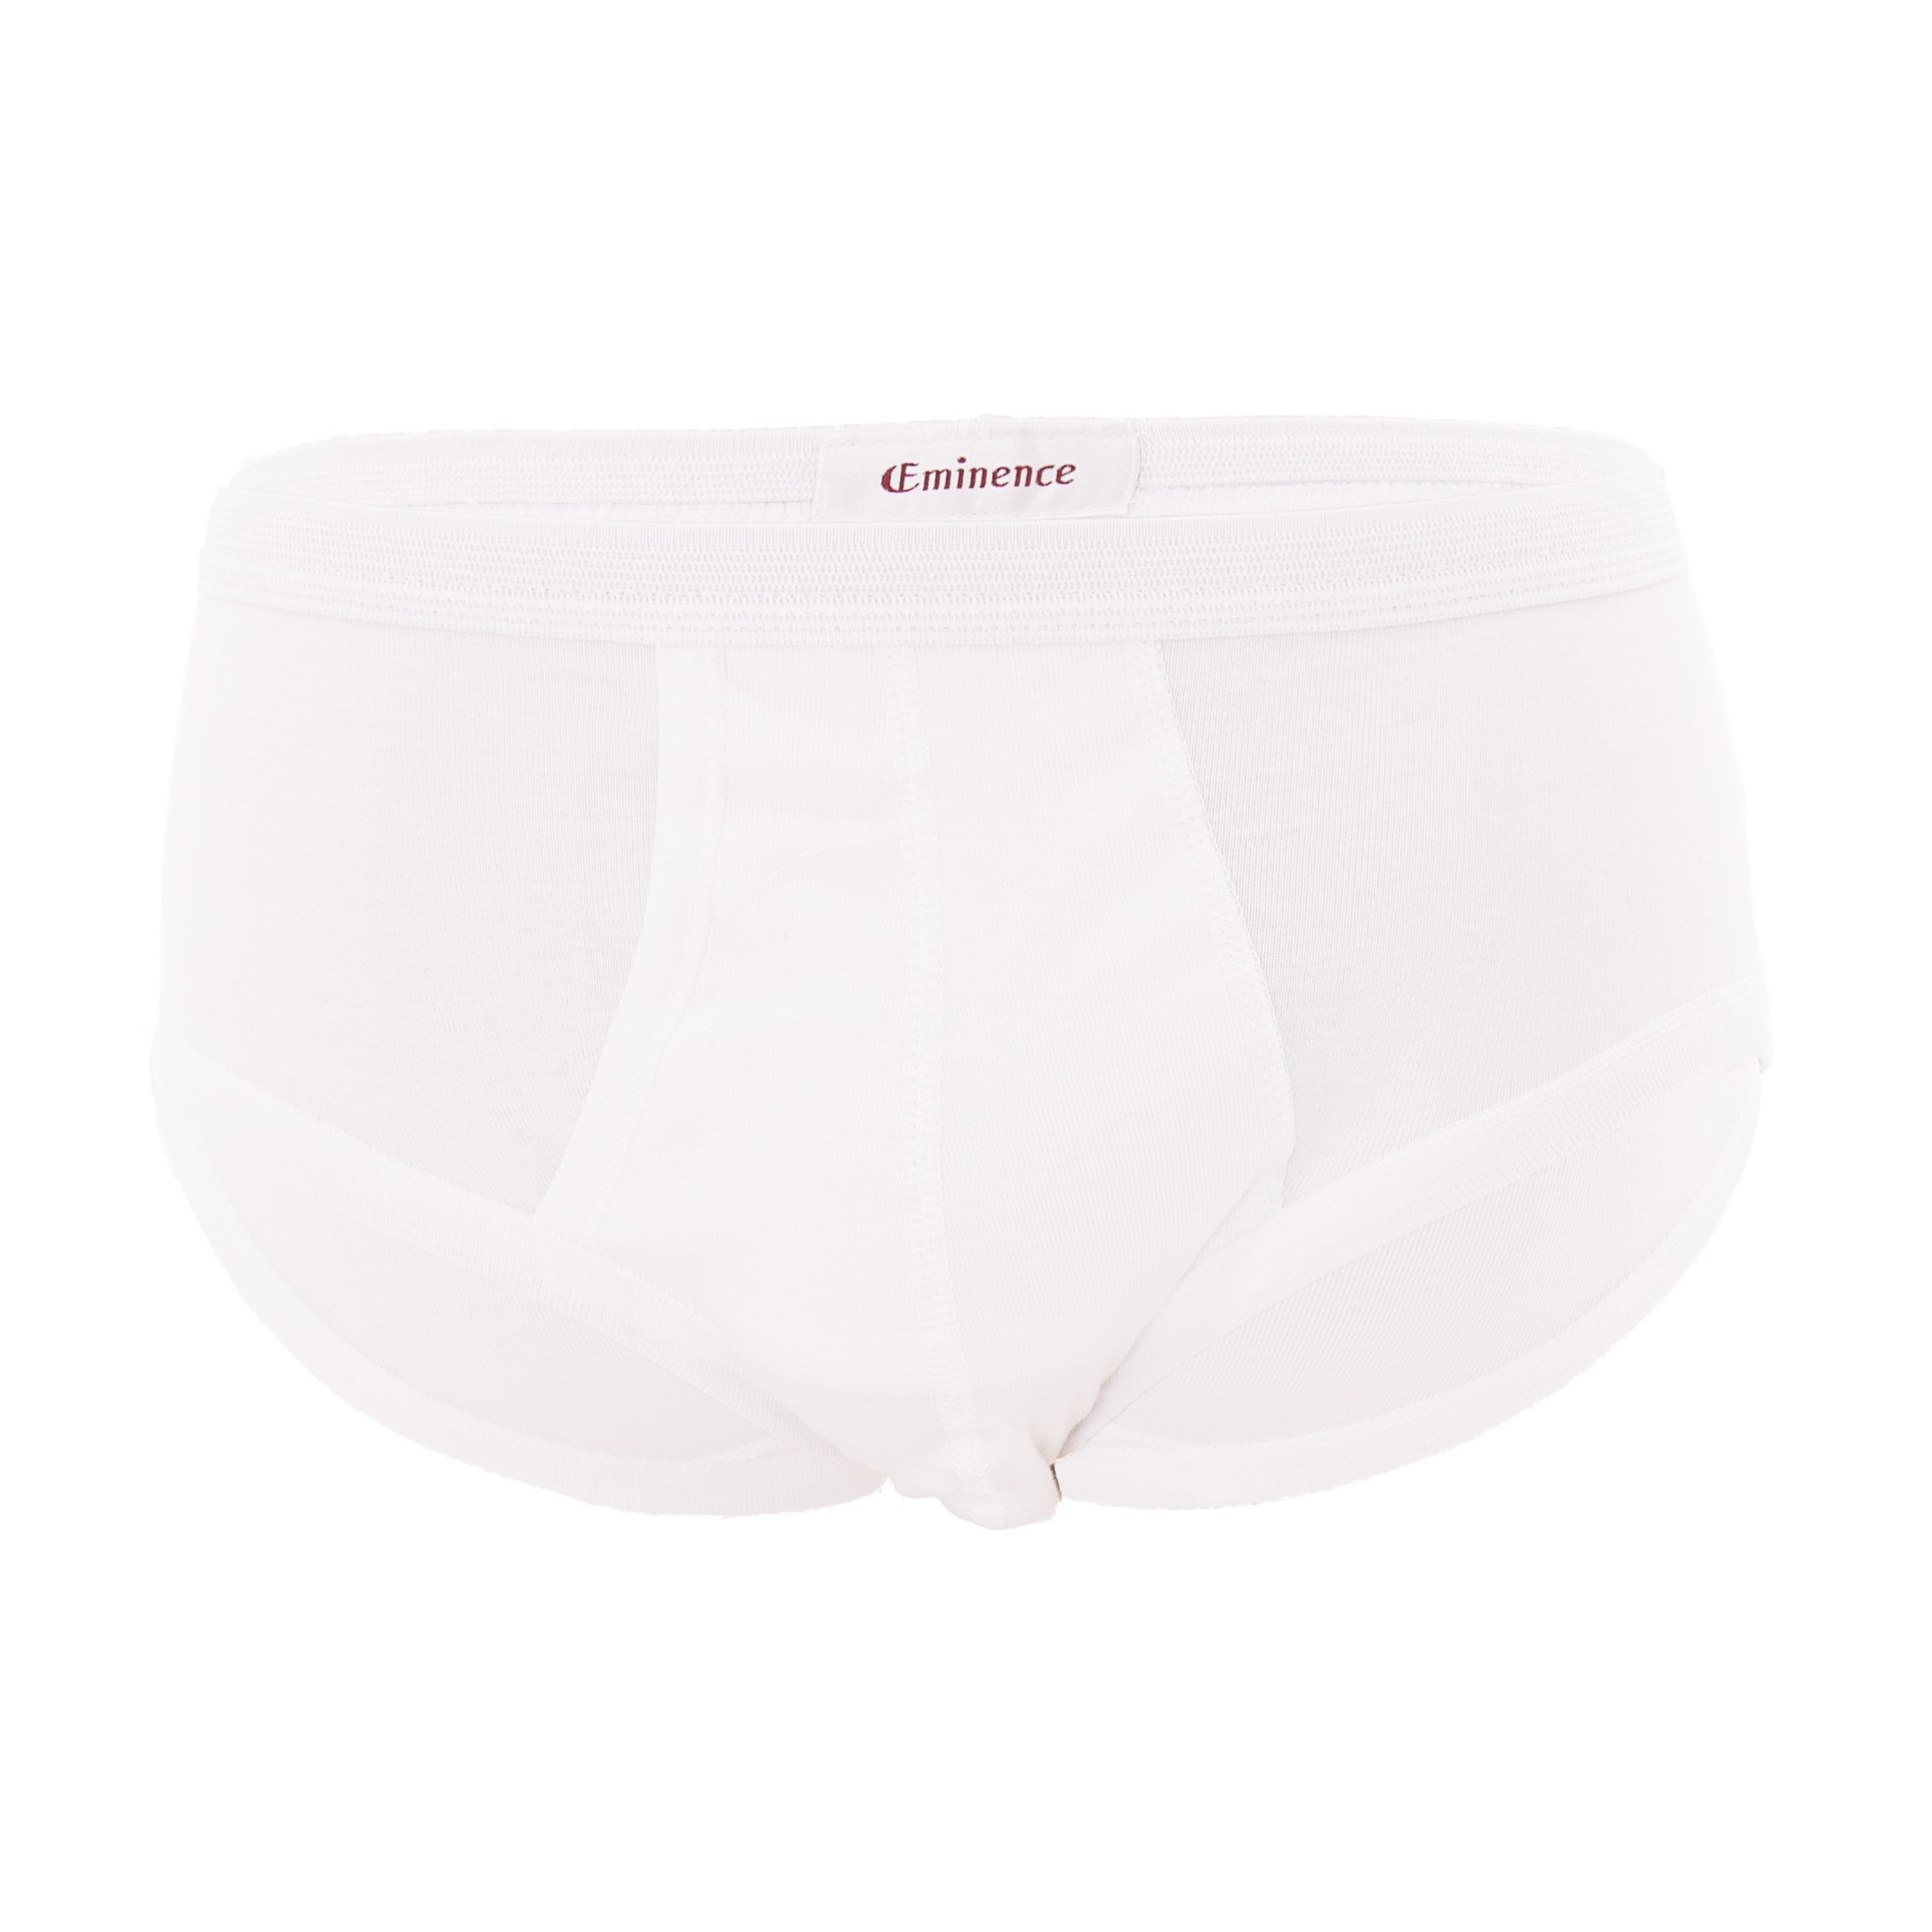 Juliemay: Allergy-Friendly Underwear Review